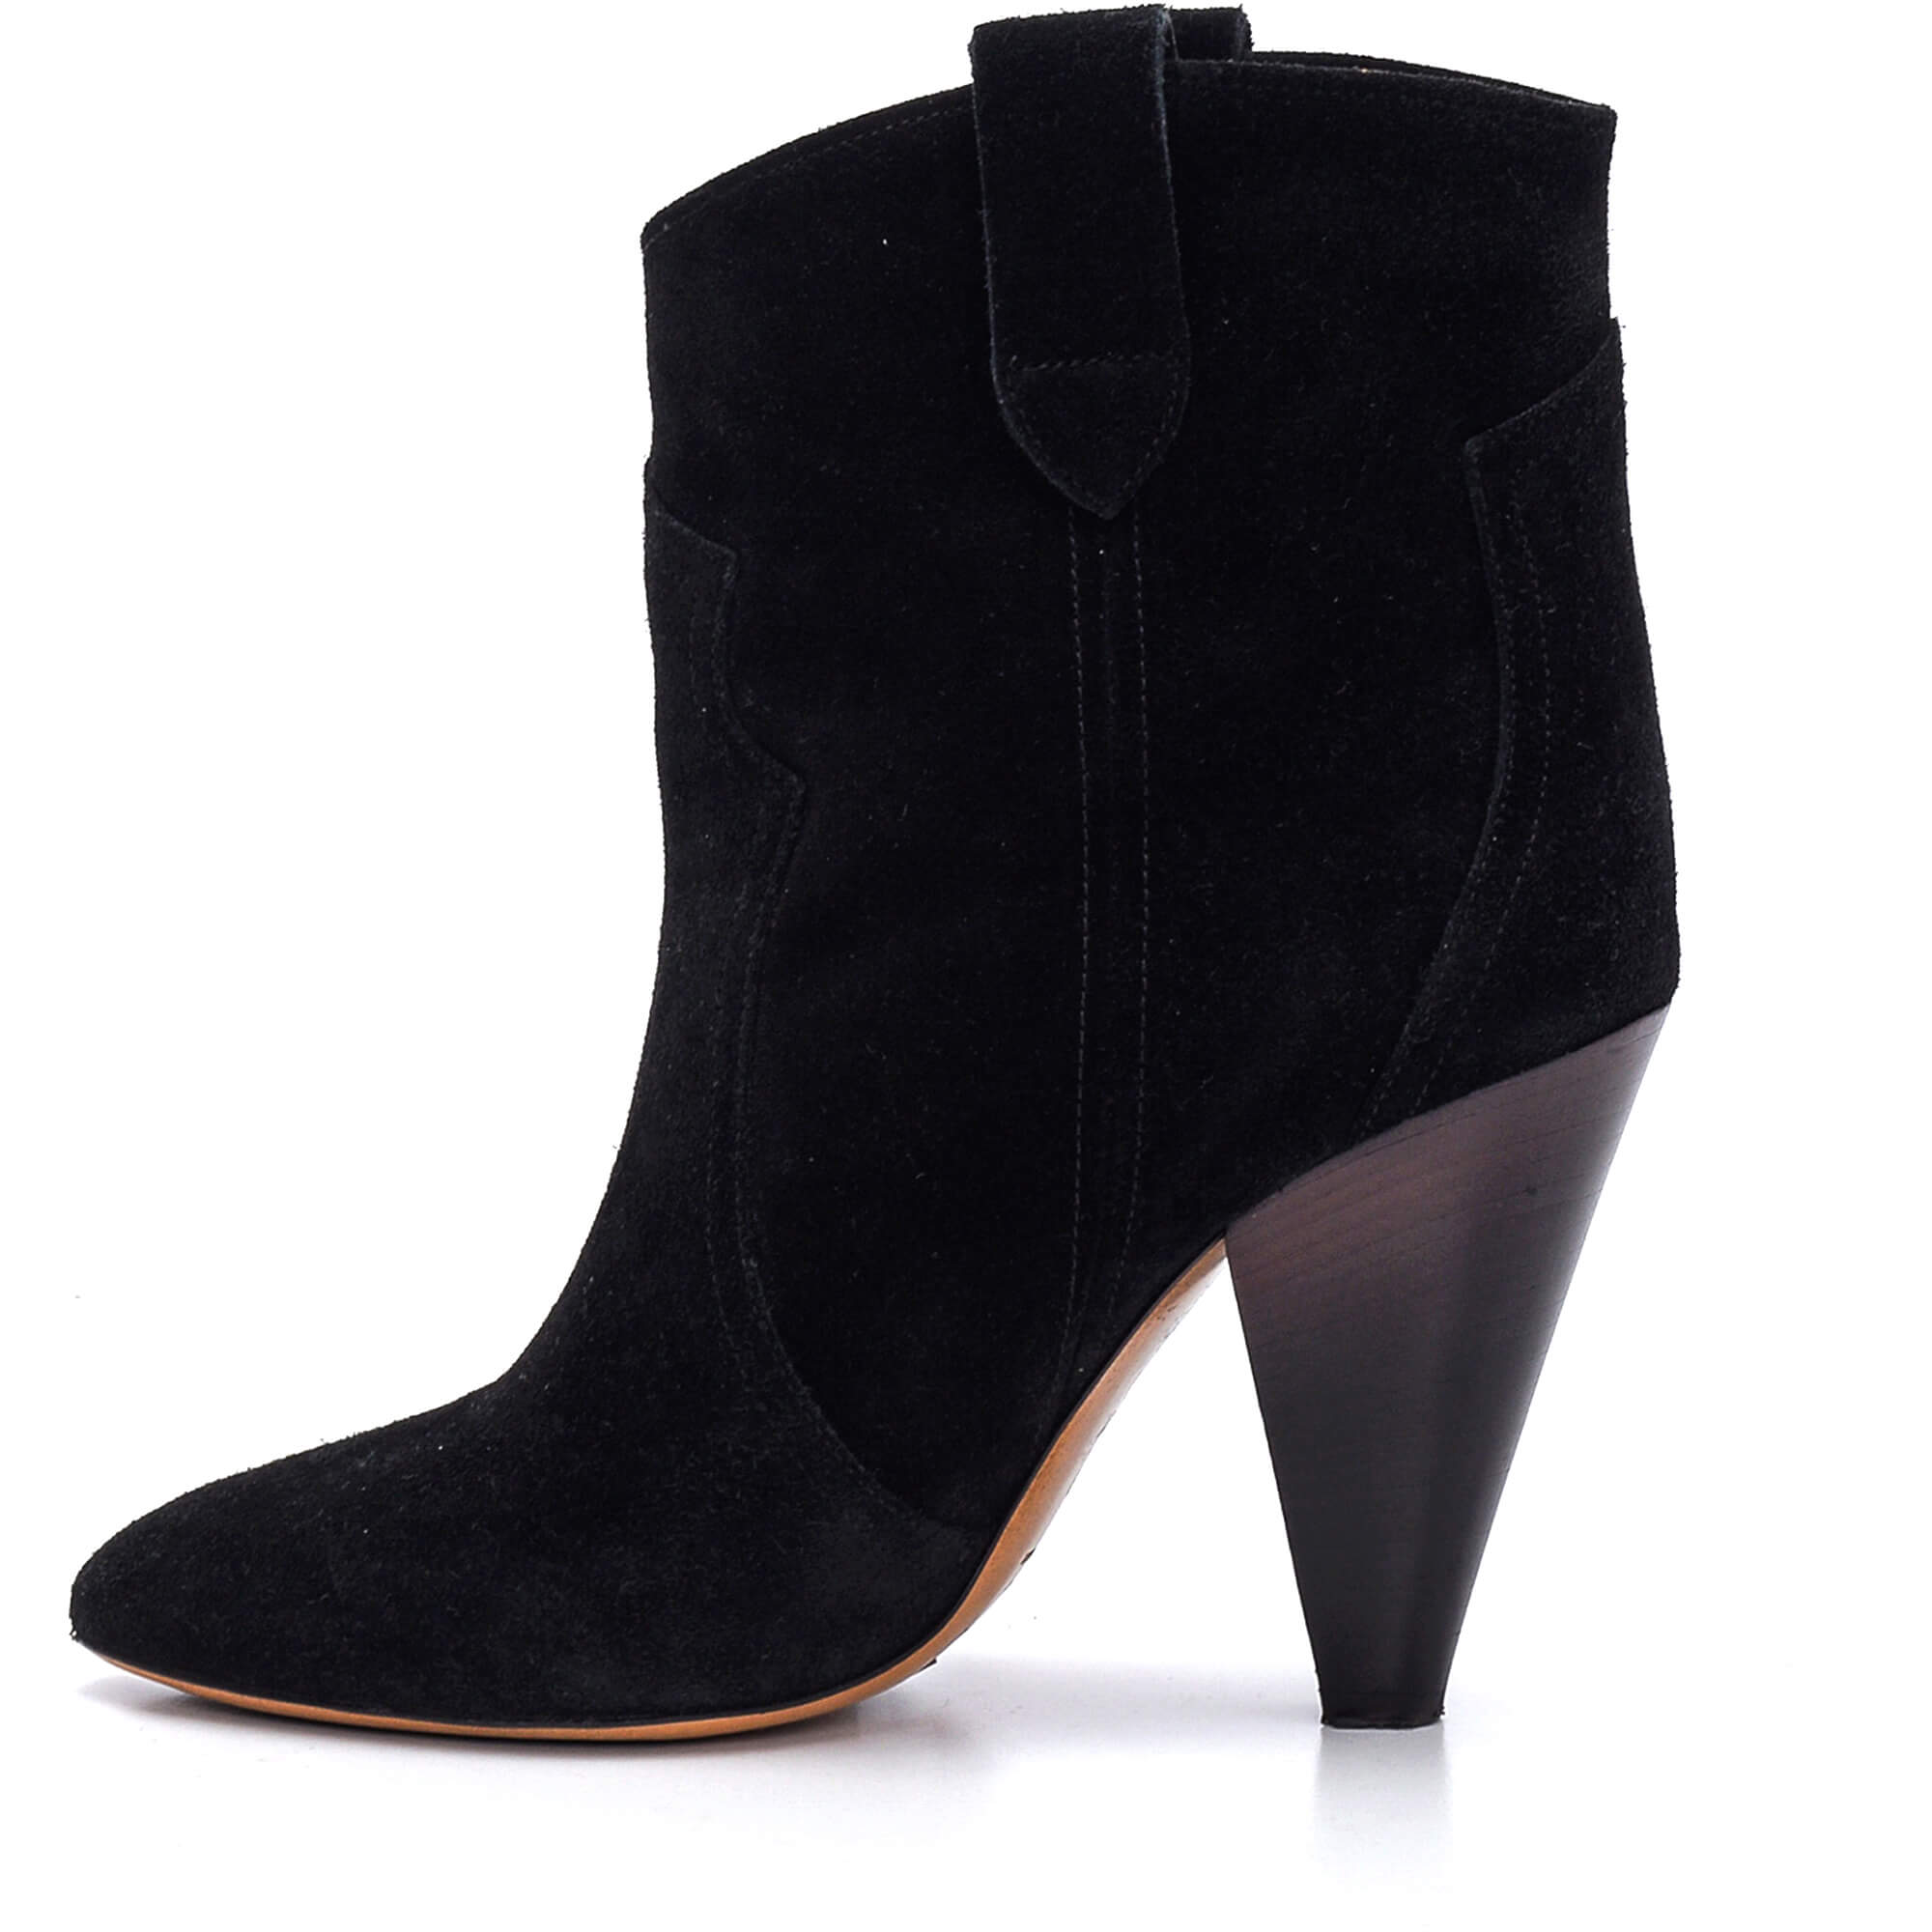 Isabel Marant - Black Suede Heeled Ankle Boots